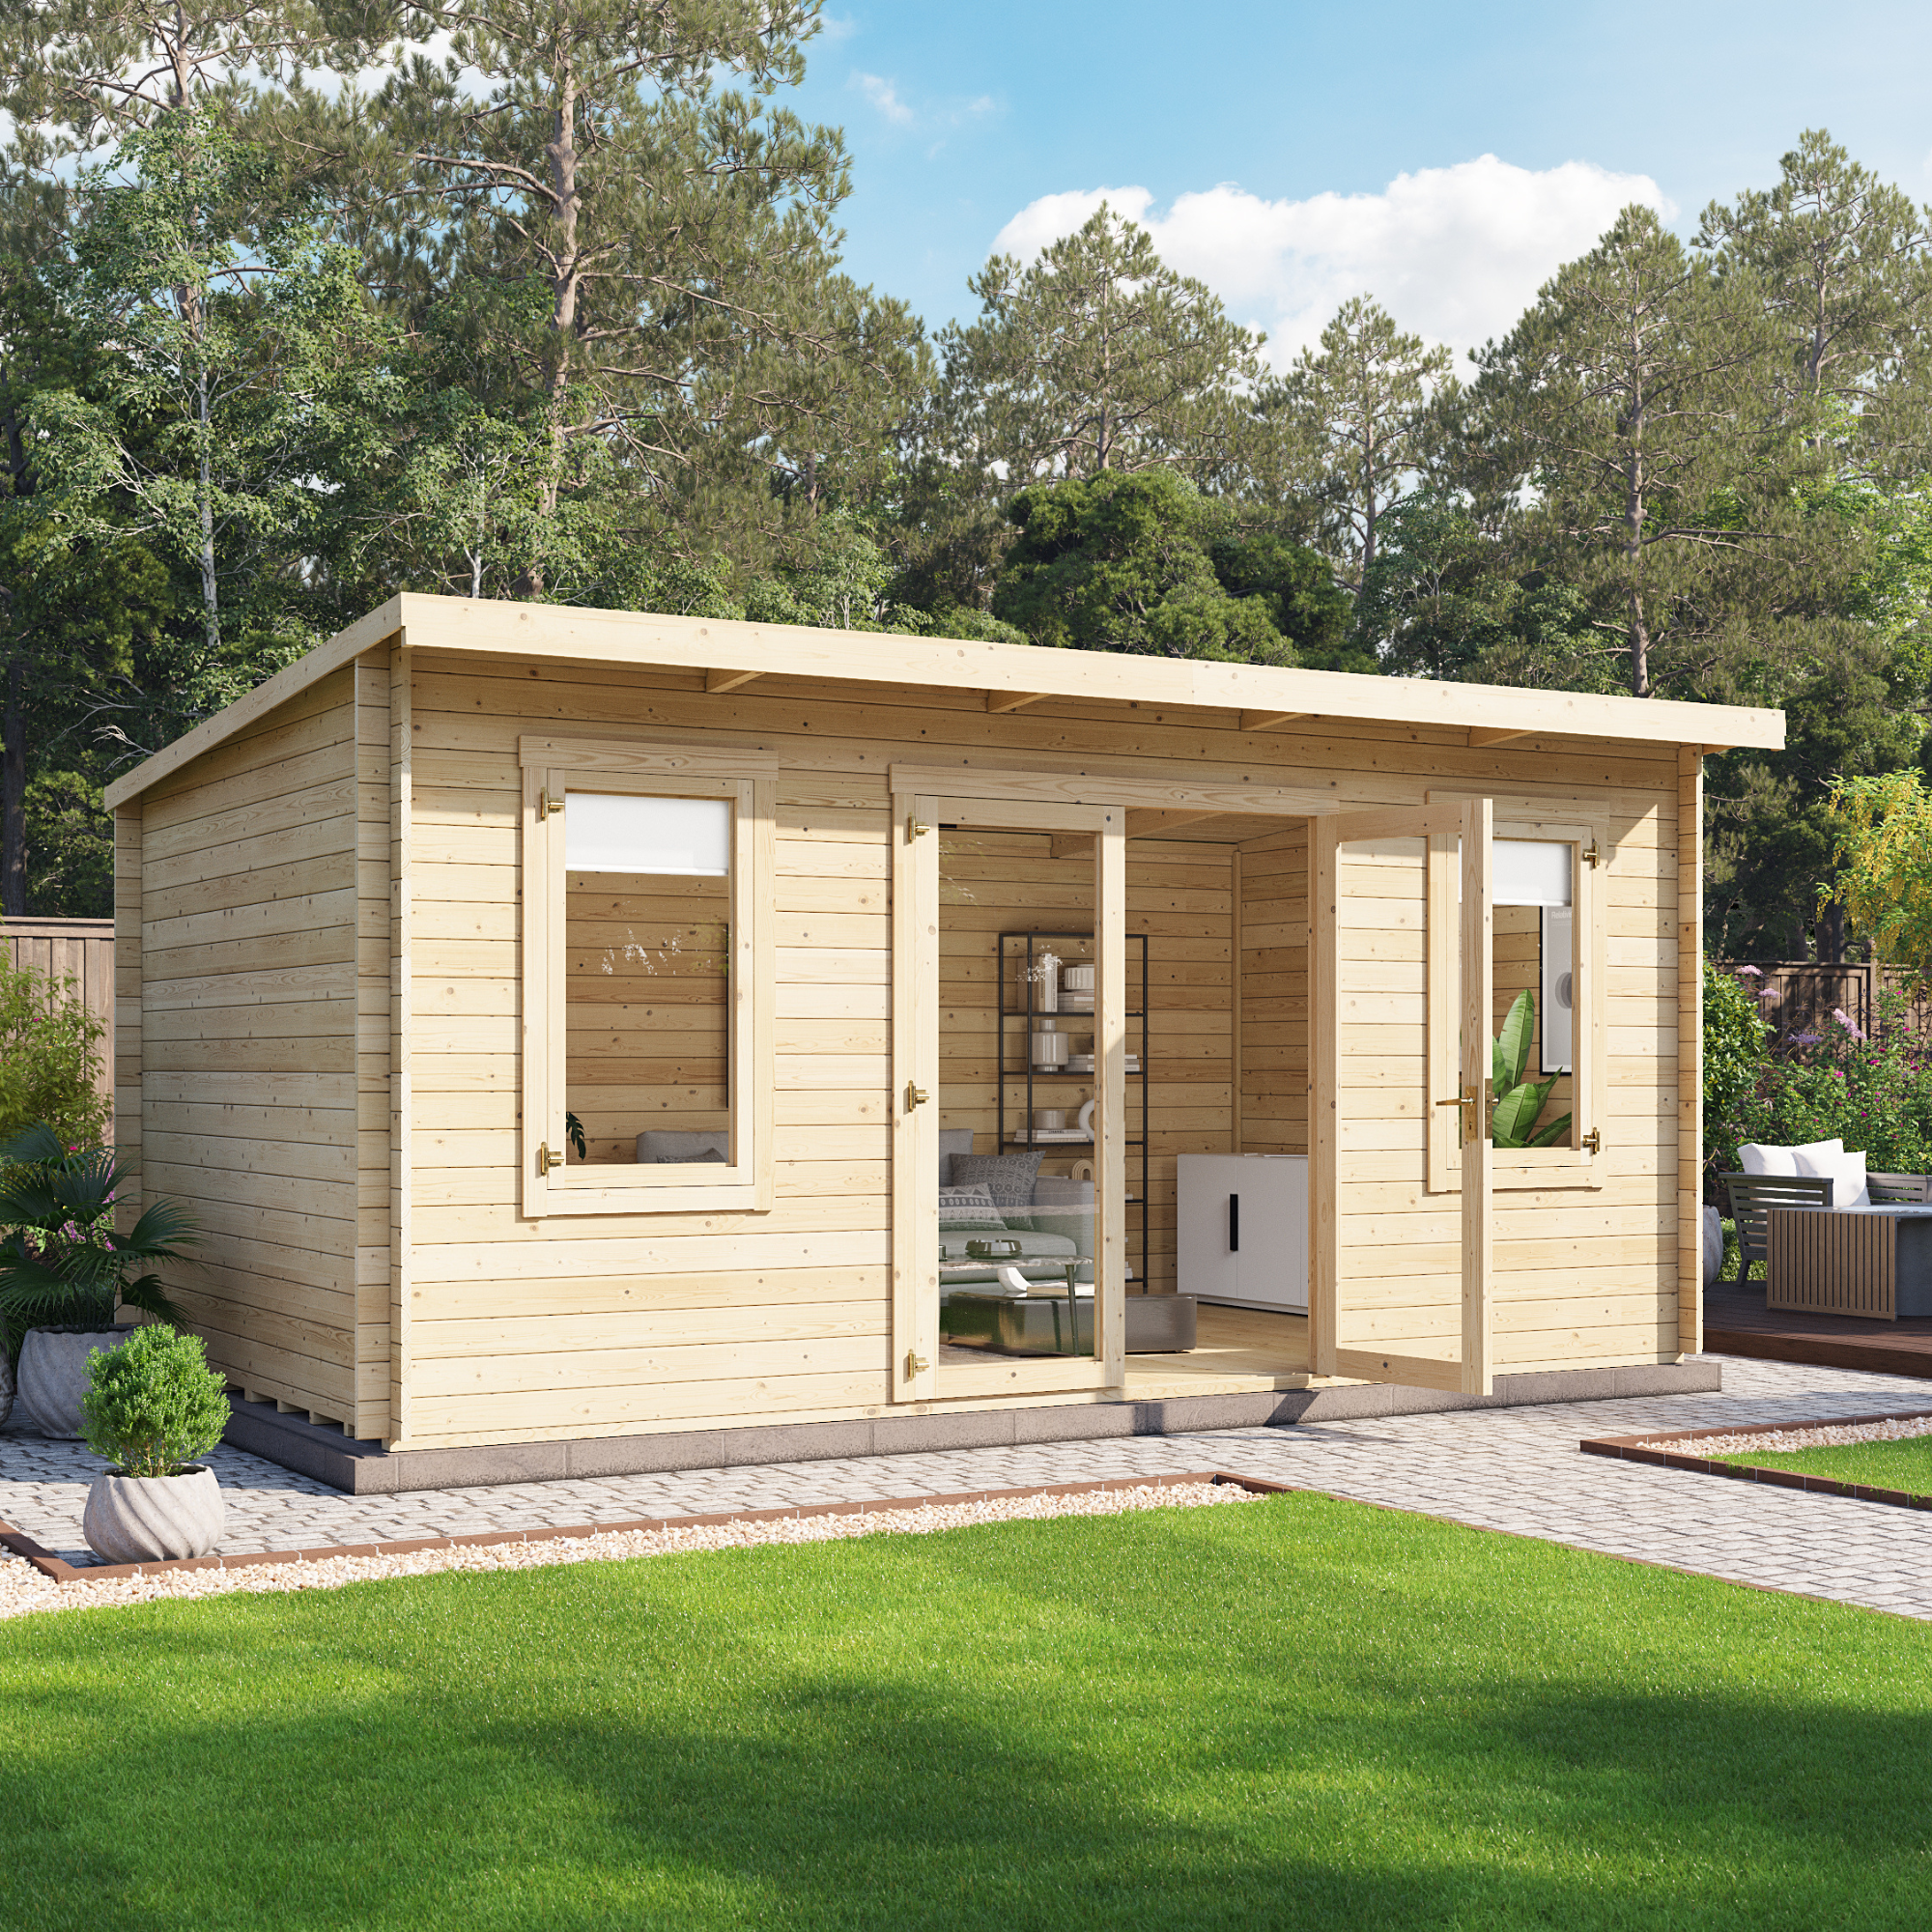 5 x 3 Log Cabin Summer House - BillyOh Fraya Pent Log Cabin - 28mm Thickness Wooden Log Cabin Summer houses - 5m x 3m